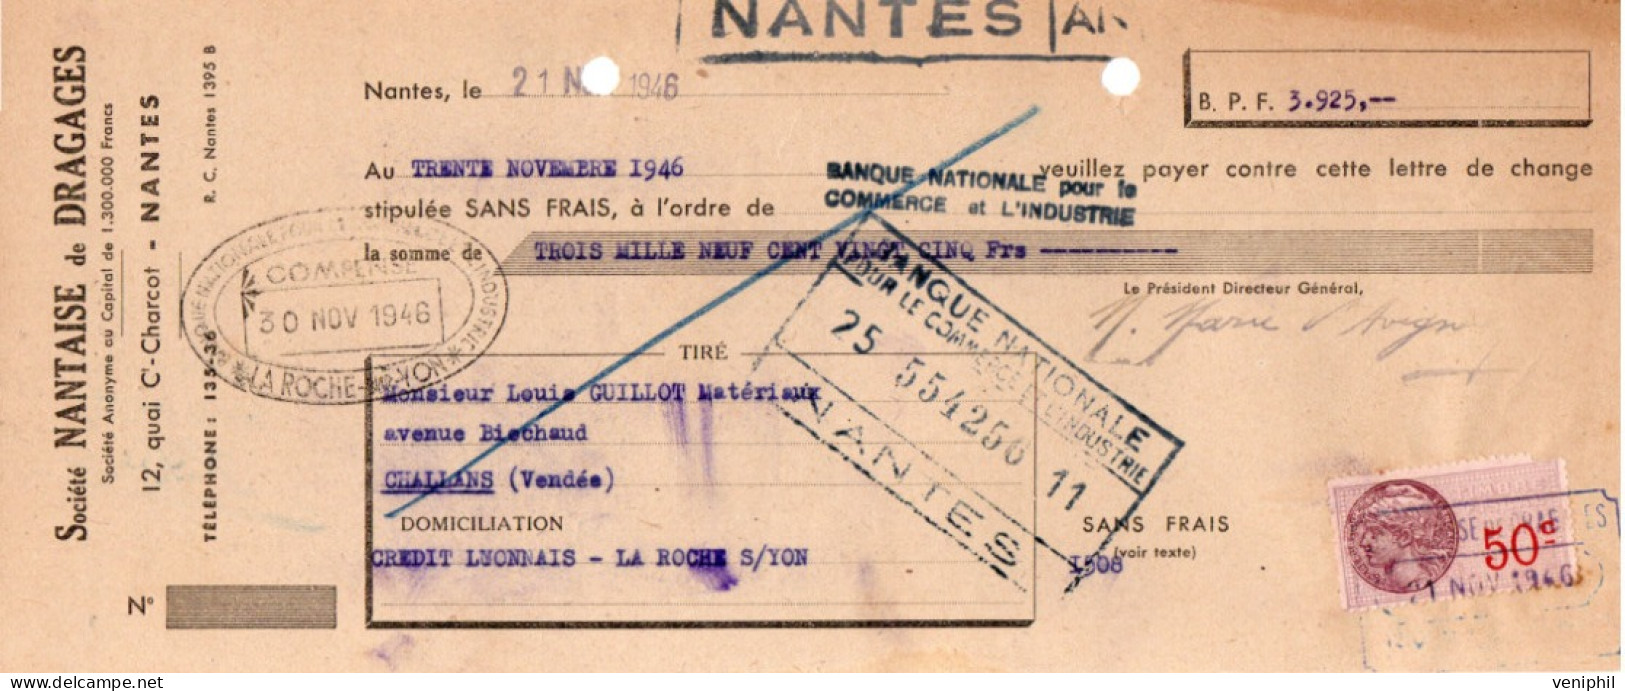 LETTRE  DE CHANGETIMBREE- SOCIETE NANTAISE DE DRAGAGES -NANTES - ANNEE 1946 - Cambiali